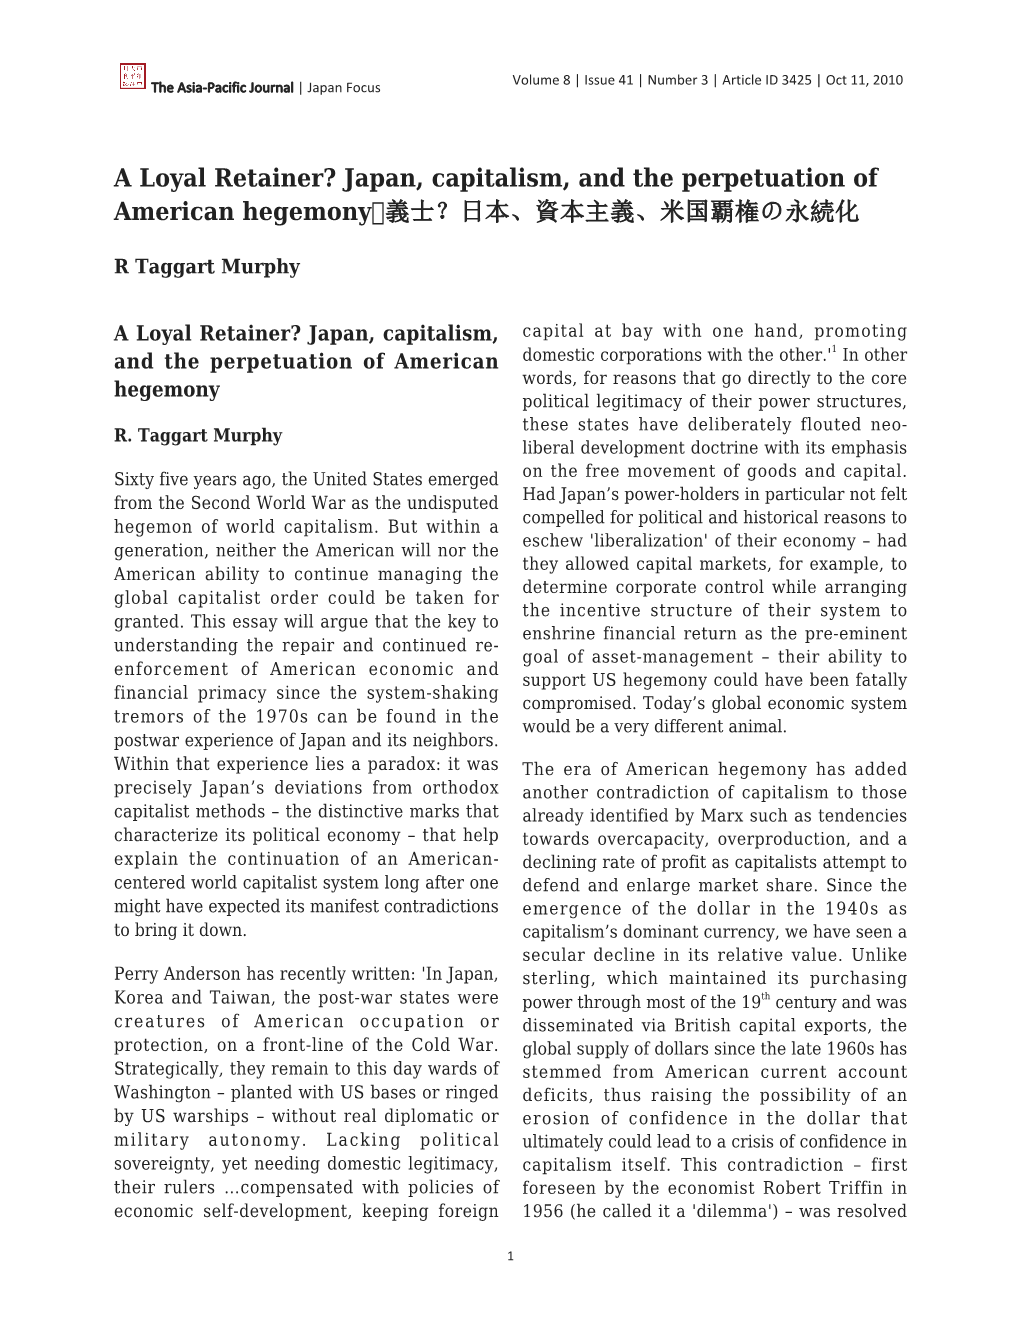 Japan, Capitalism, and the Perpetuation of American Hegemony 義士？日本、資本主義、米国覇権の永続化